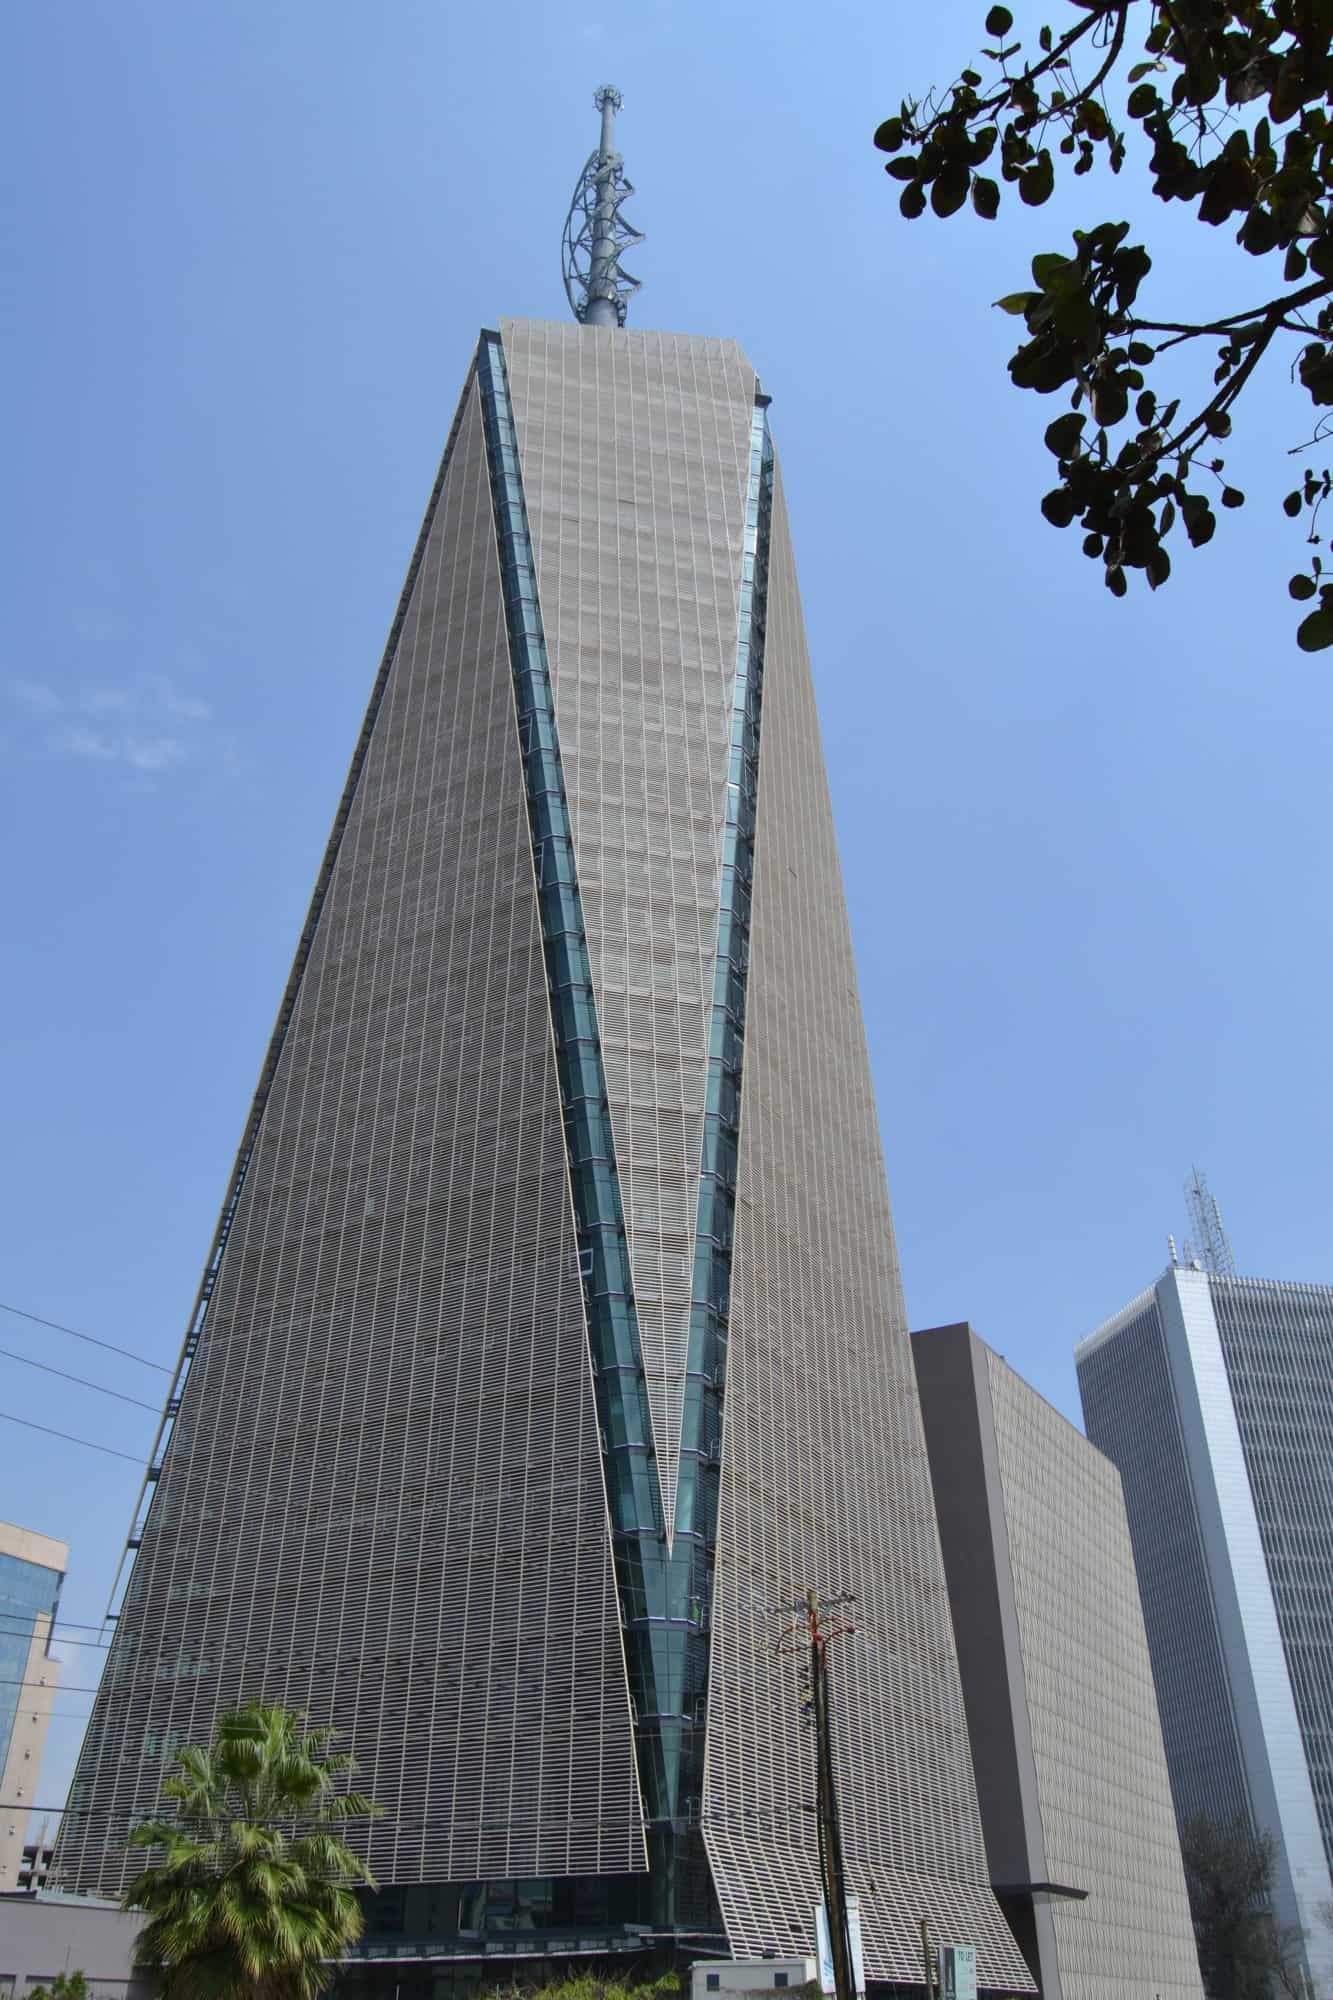 Tallest building of Kenya